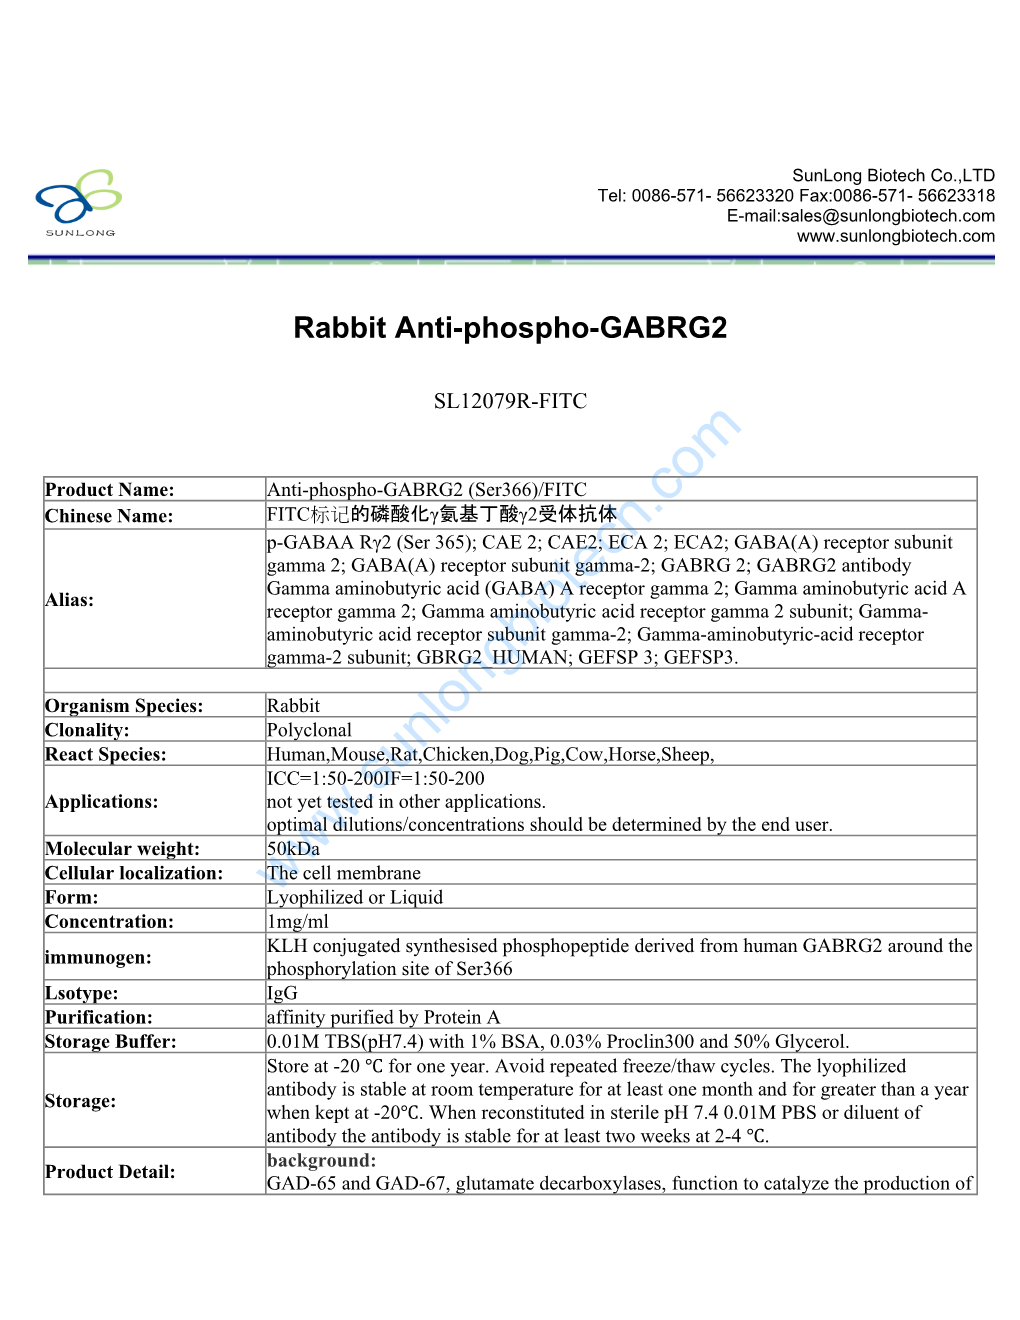 Rabbit Anti-Phospho-GABRG2-SL12079R